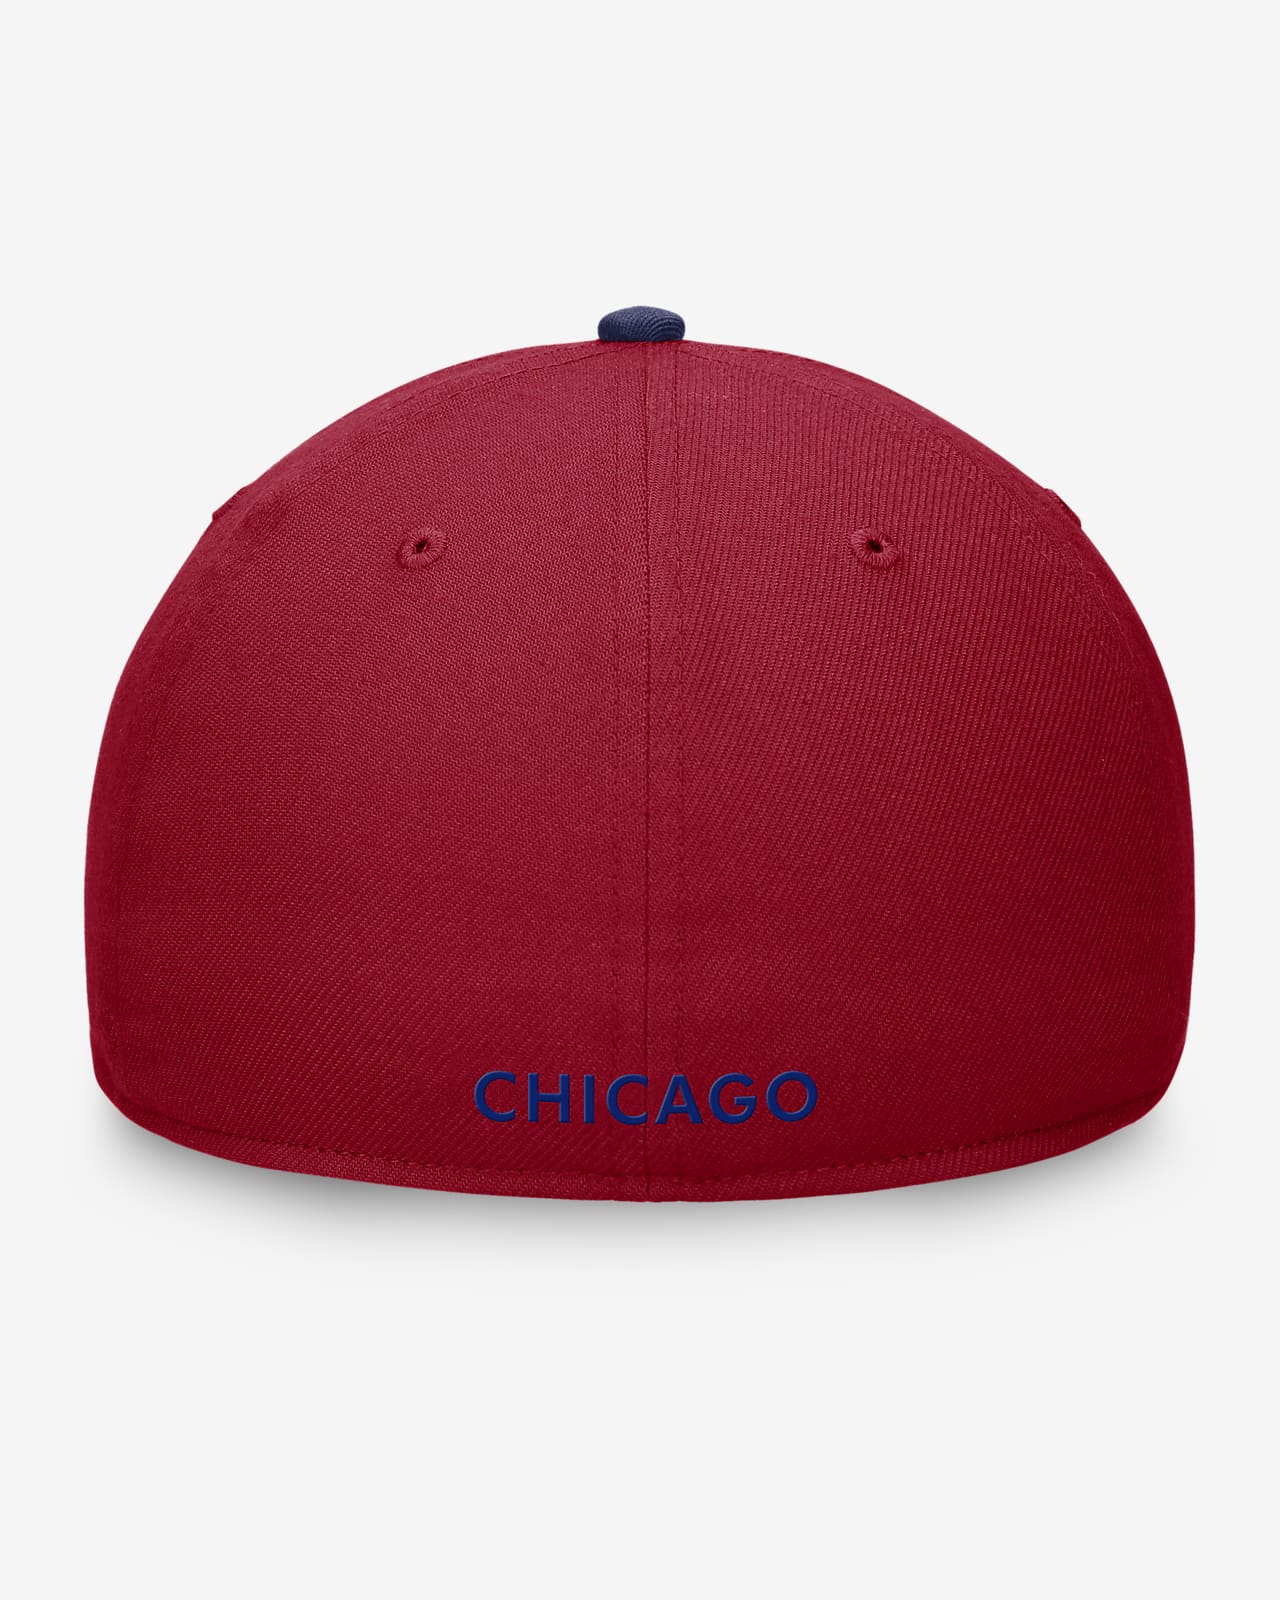 Chicago Cubs Classic99 Swoosh Men's Nike Dri-FIT MLB Hat.